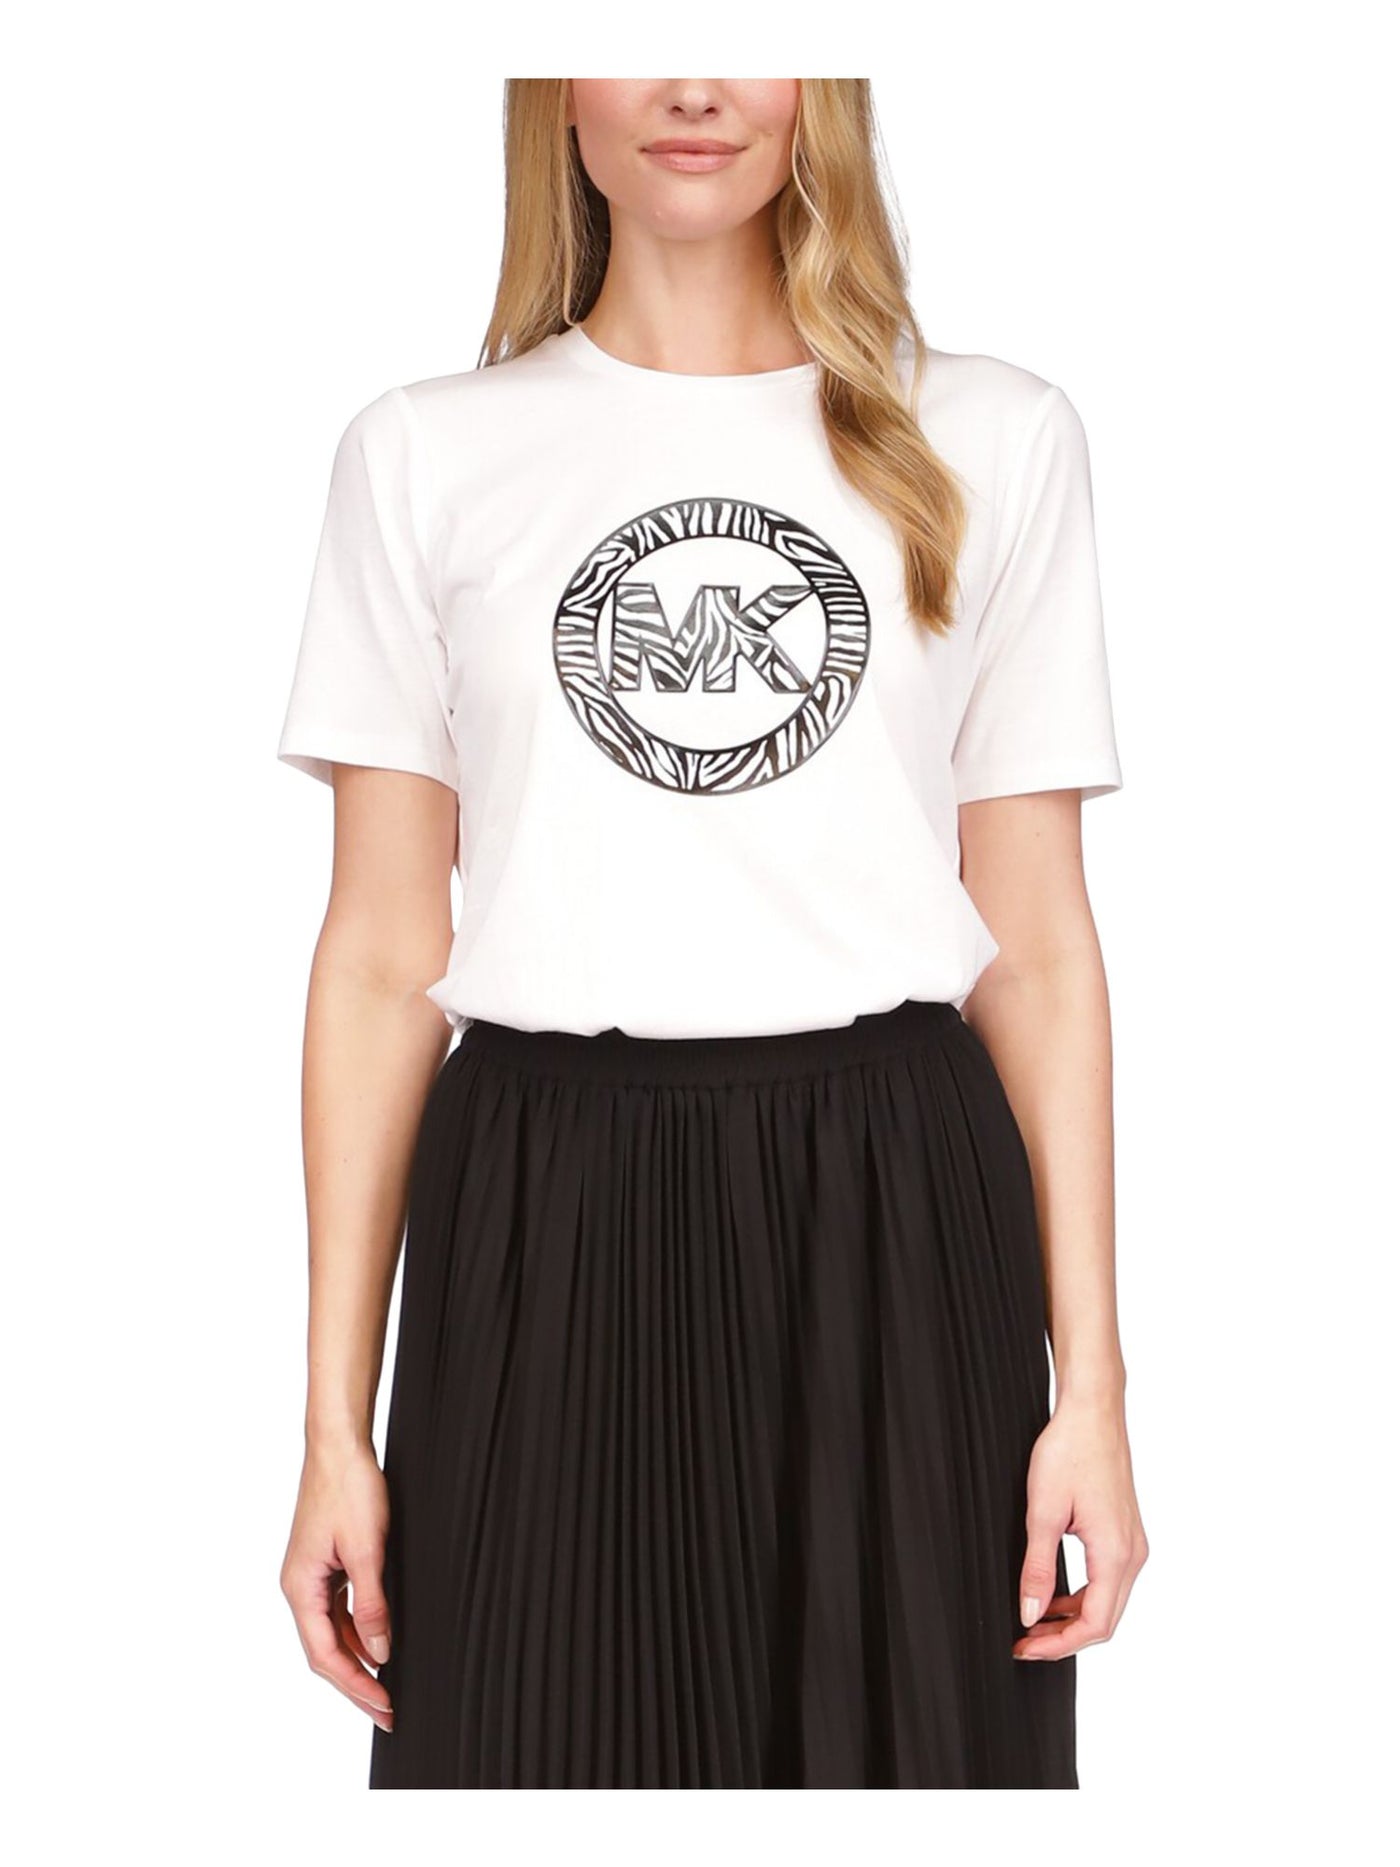 MICHAEL MICHAEL KORS Womens White Logo Graphic Short Sleeve Crew Neck T-Shirt M